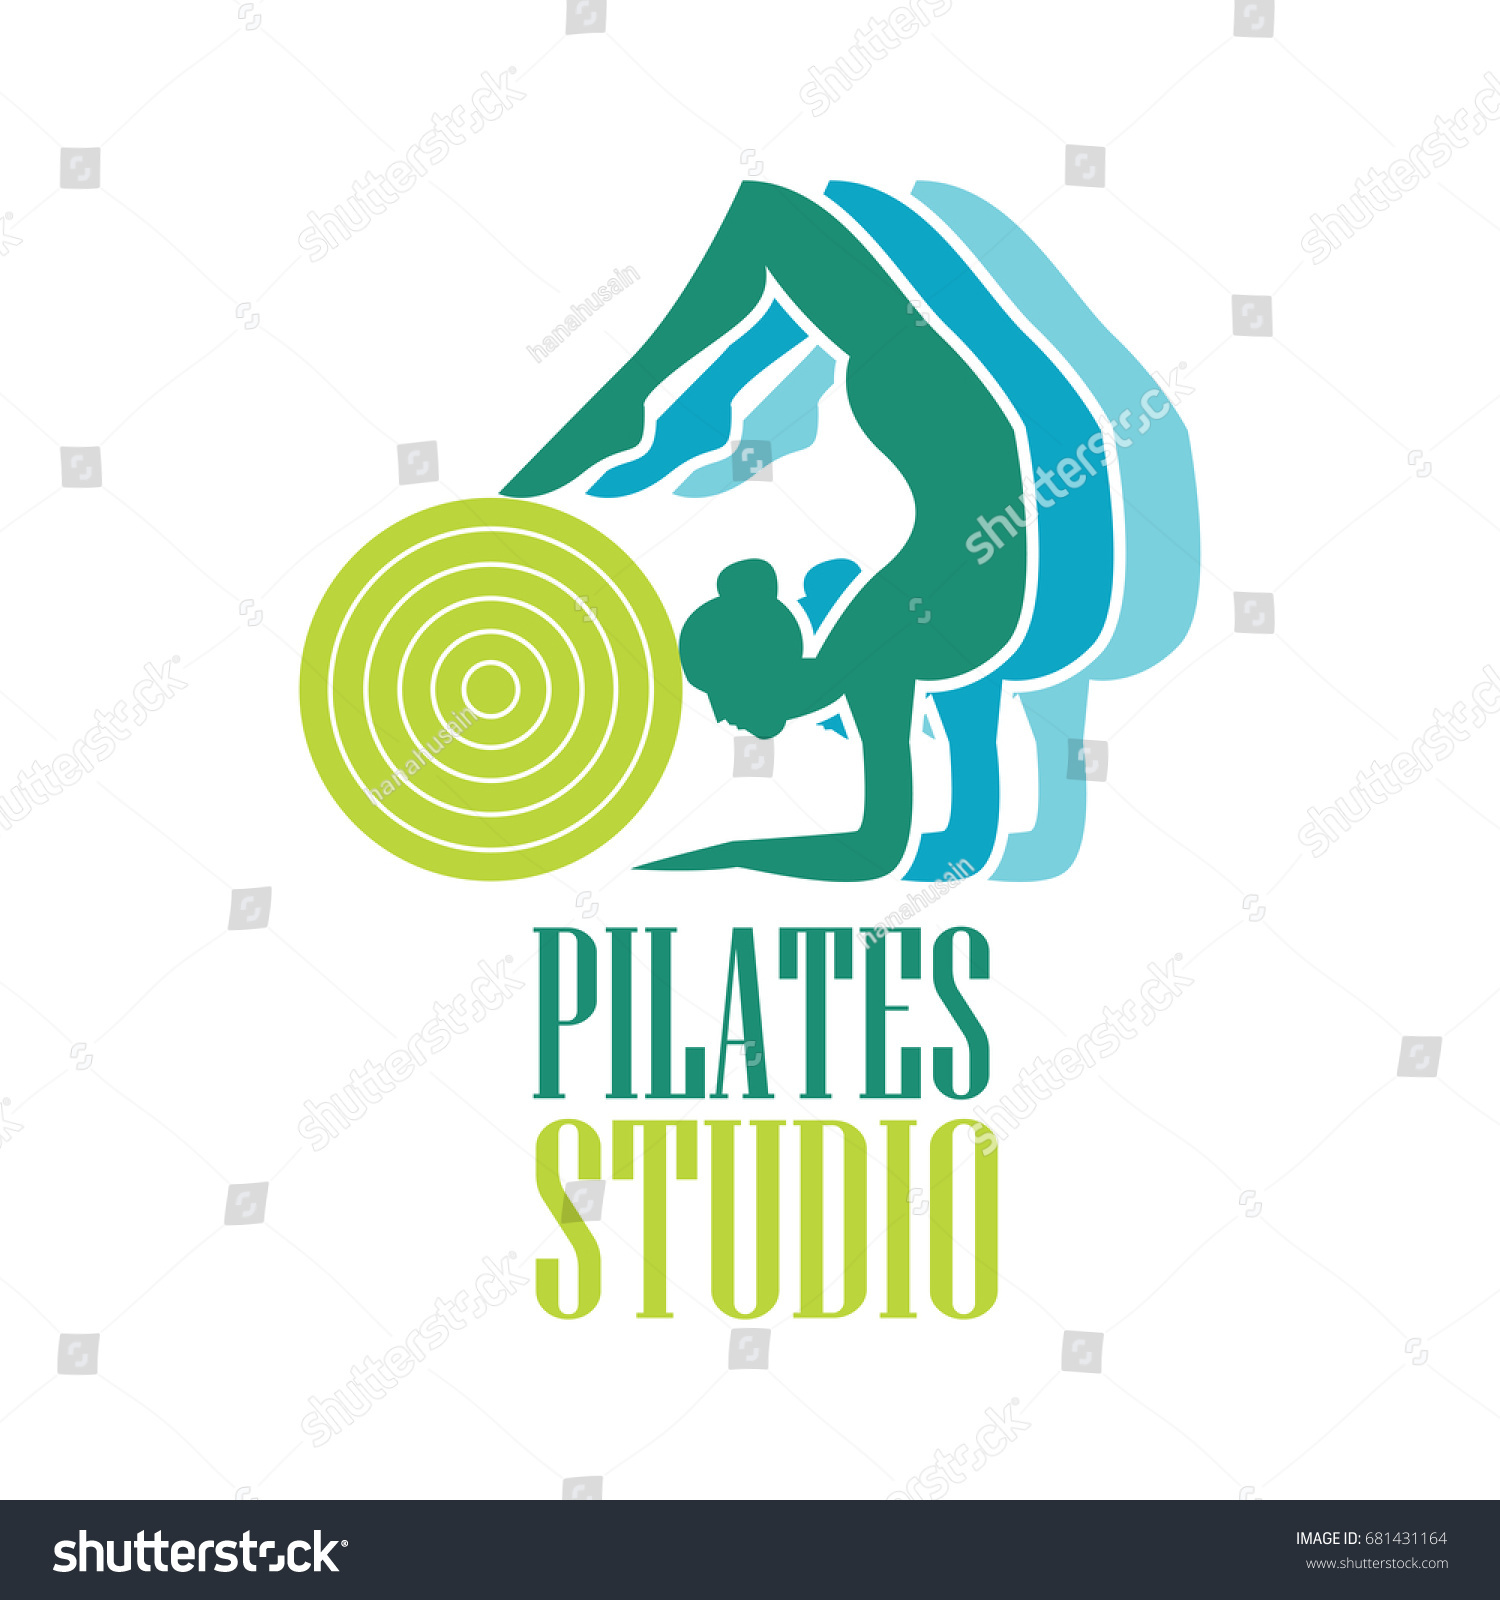 pilates school